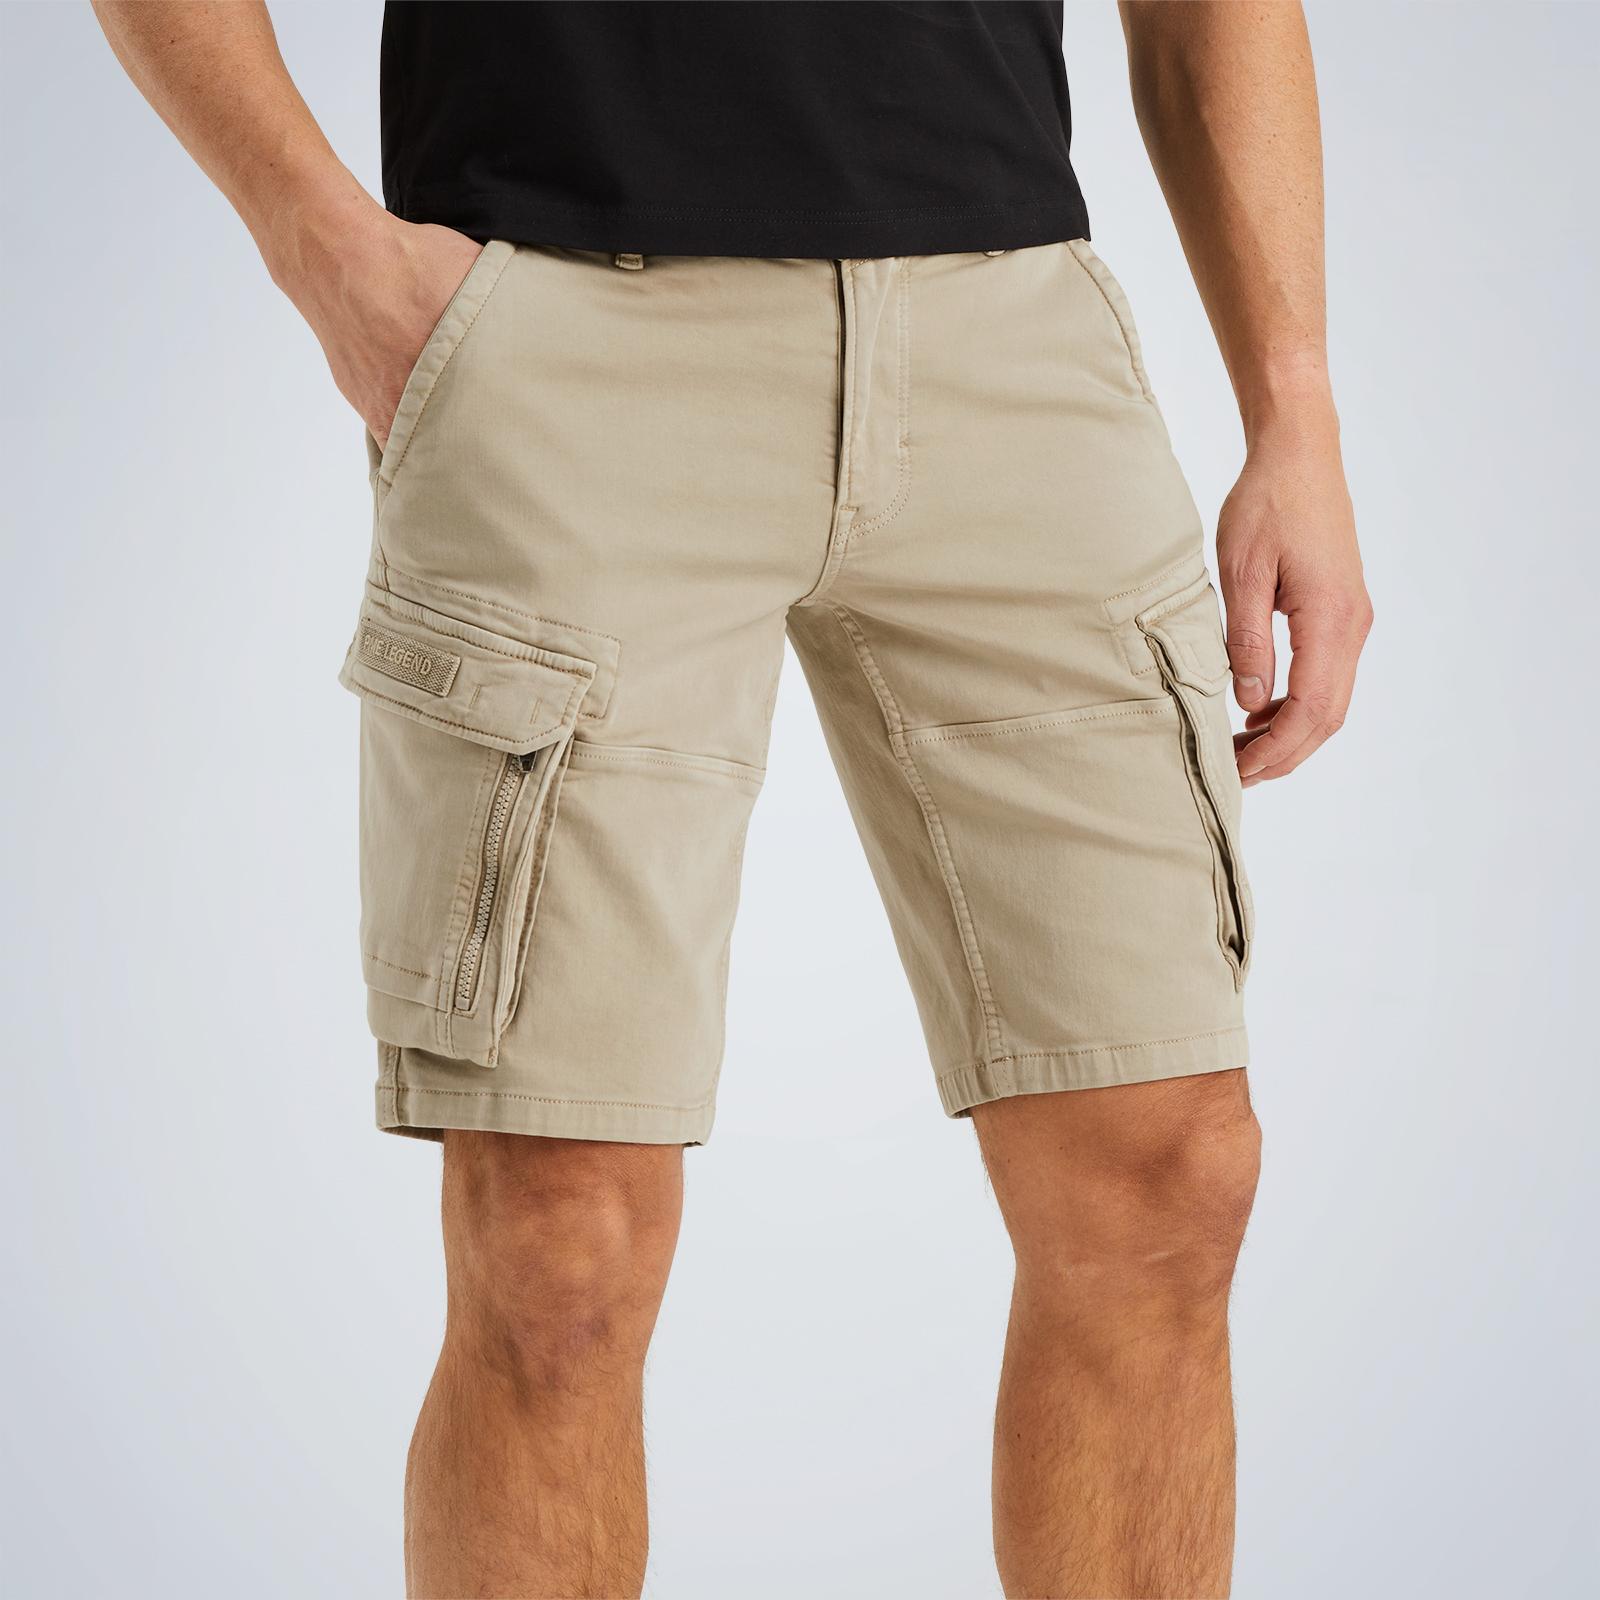 PME Legend Expedizor cargo shorts